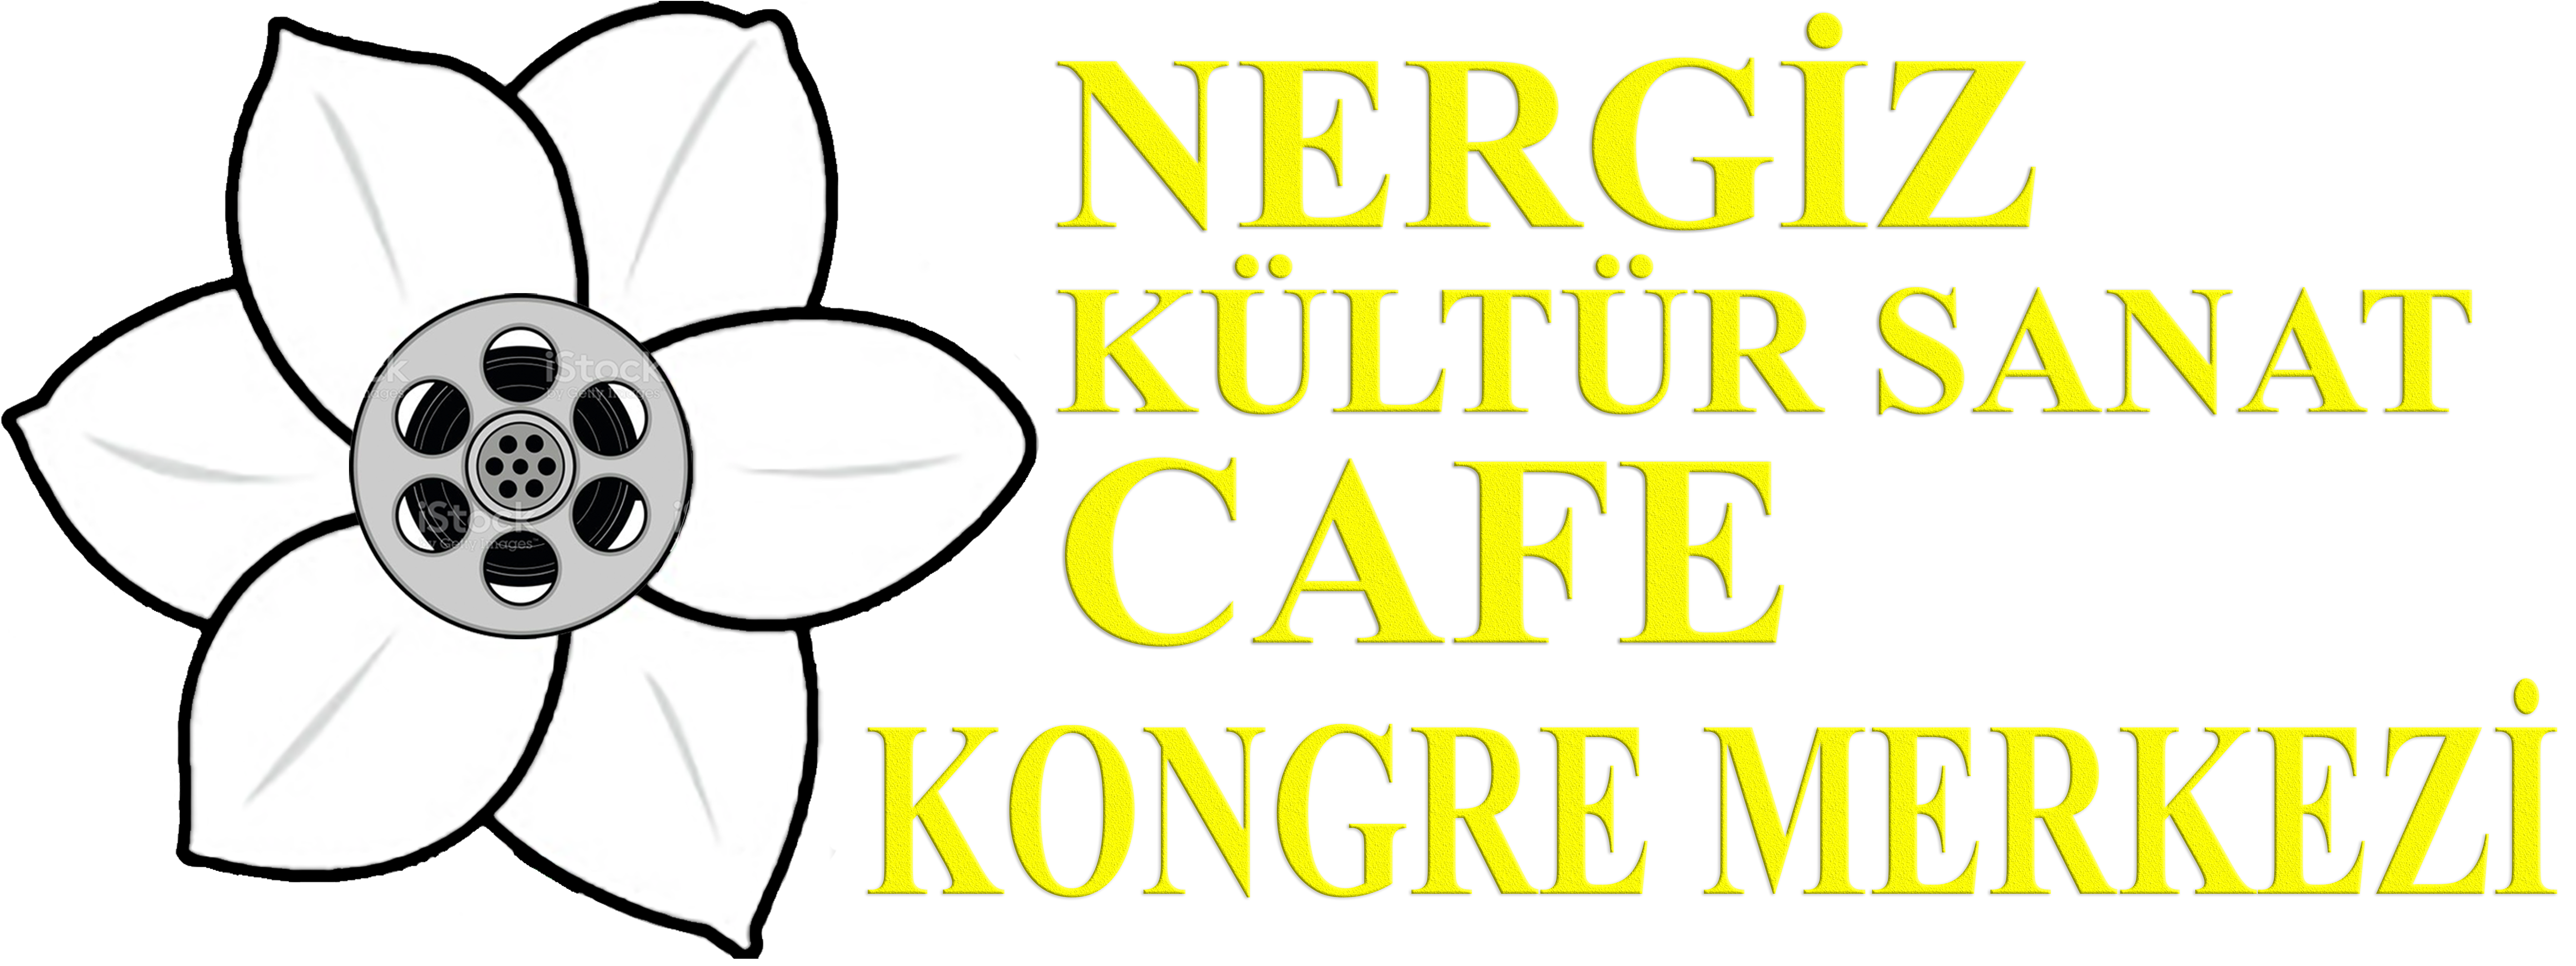 Nergiz Kültür Sanat Cafe